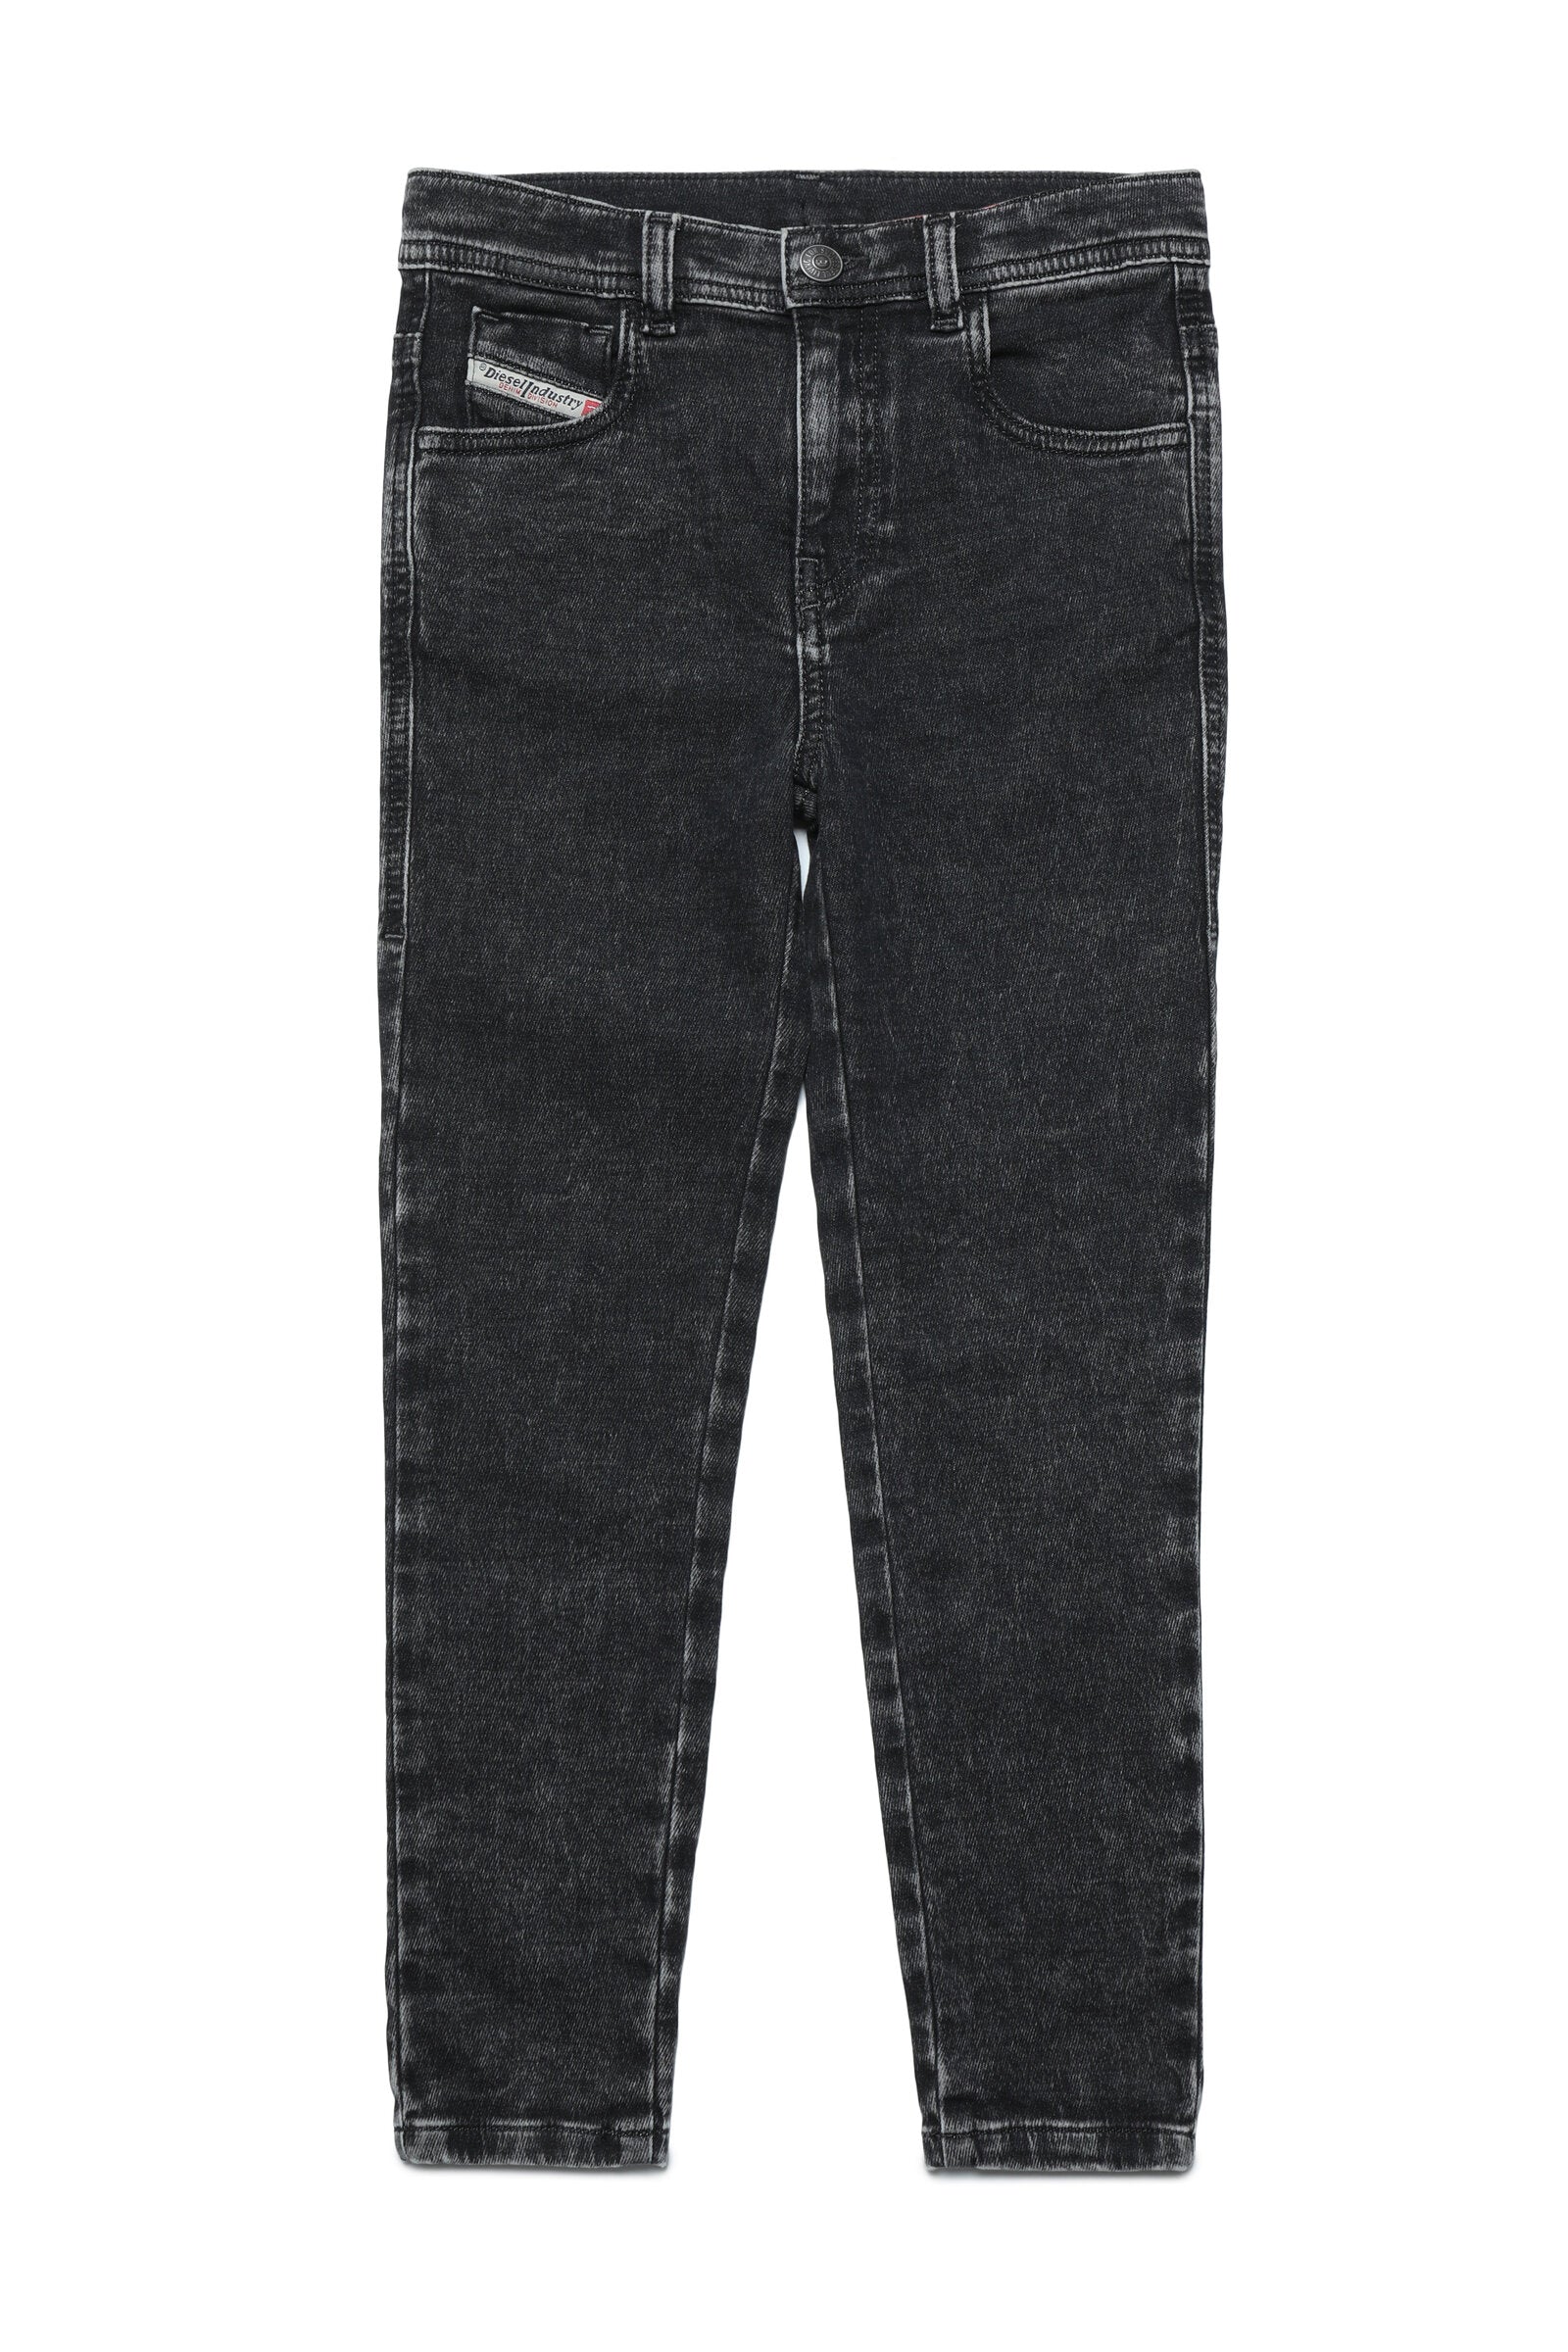 Black JoggJeans® pants with logo